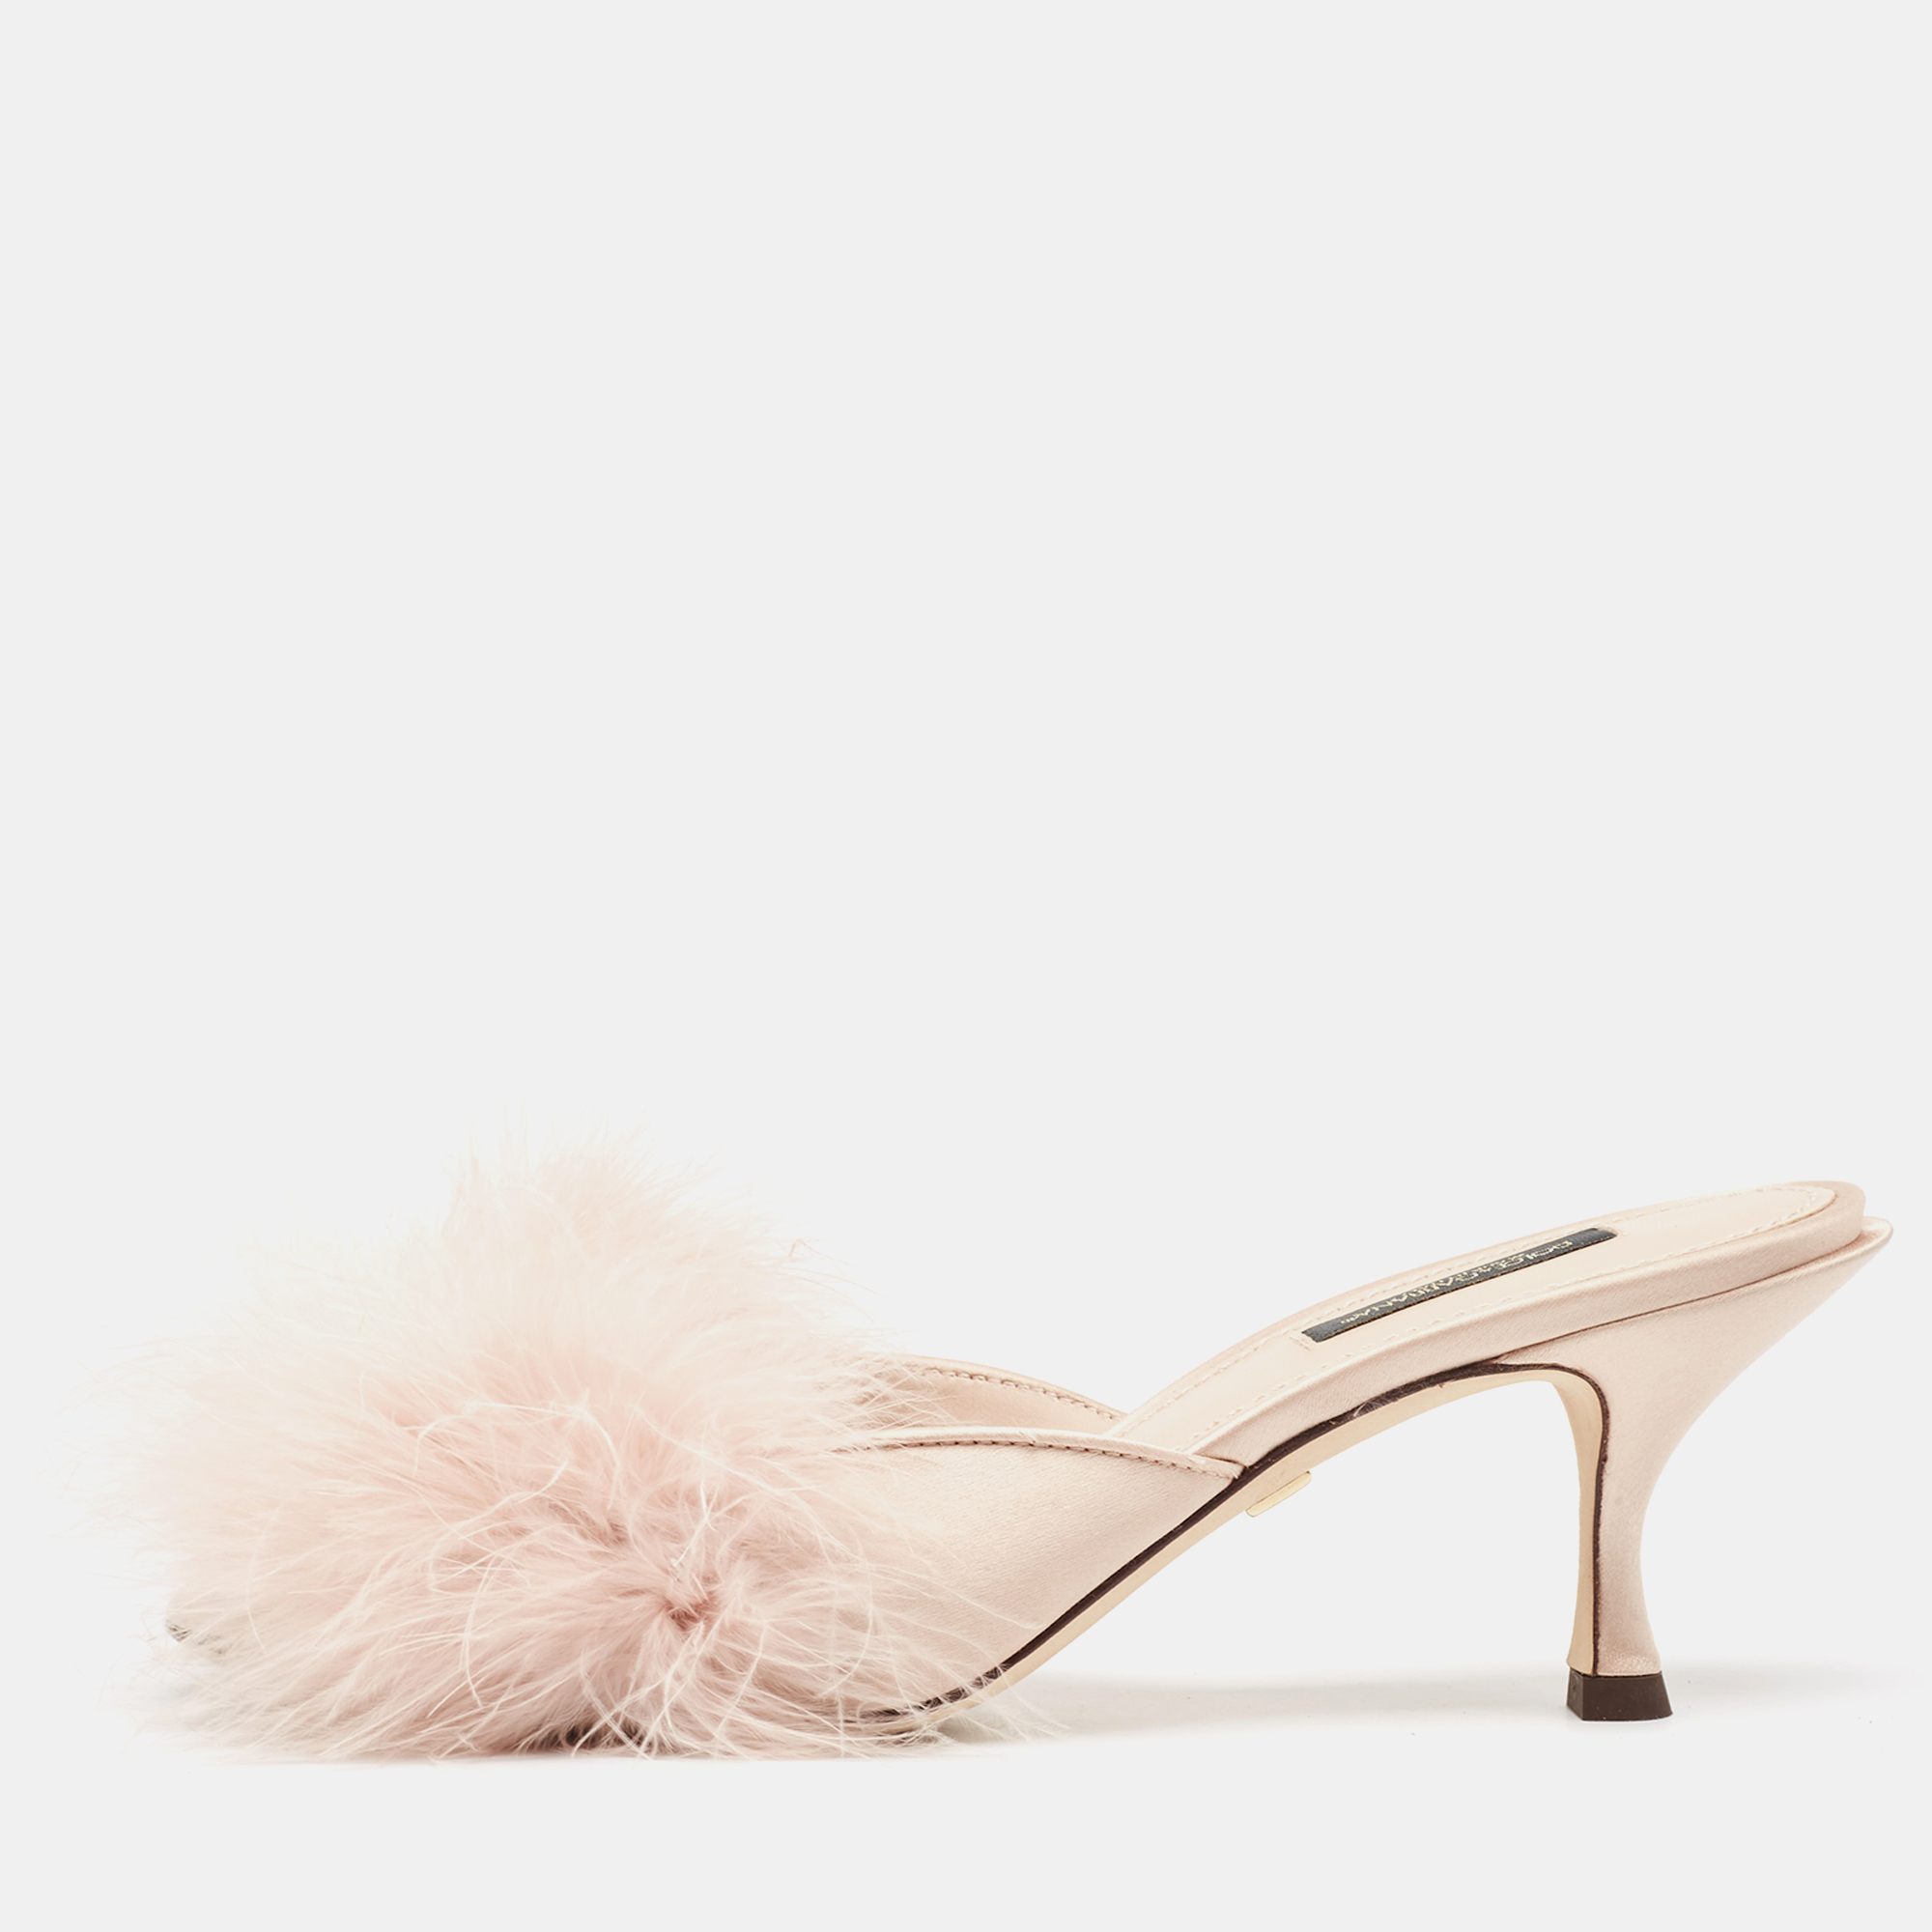 Dolce & gabbana pink satin feather detail slide sandals size 37